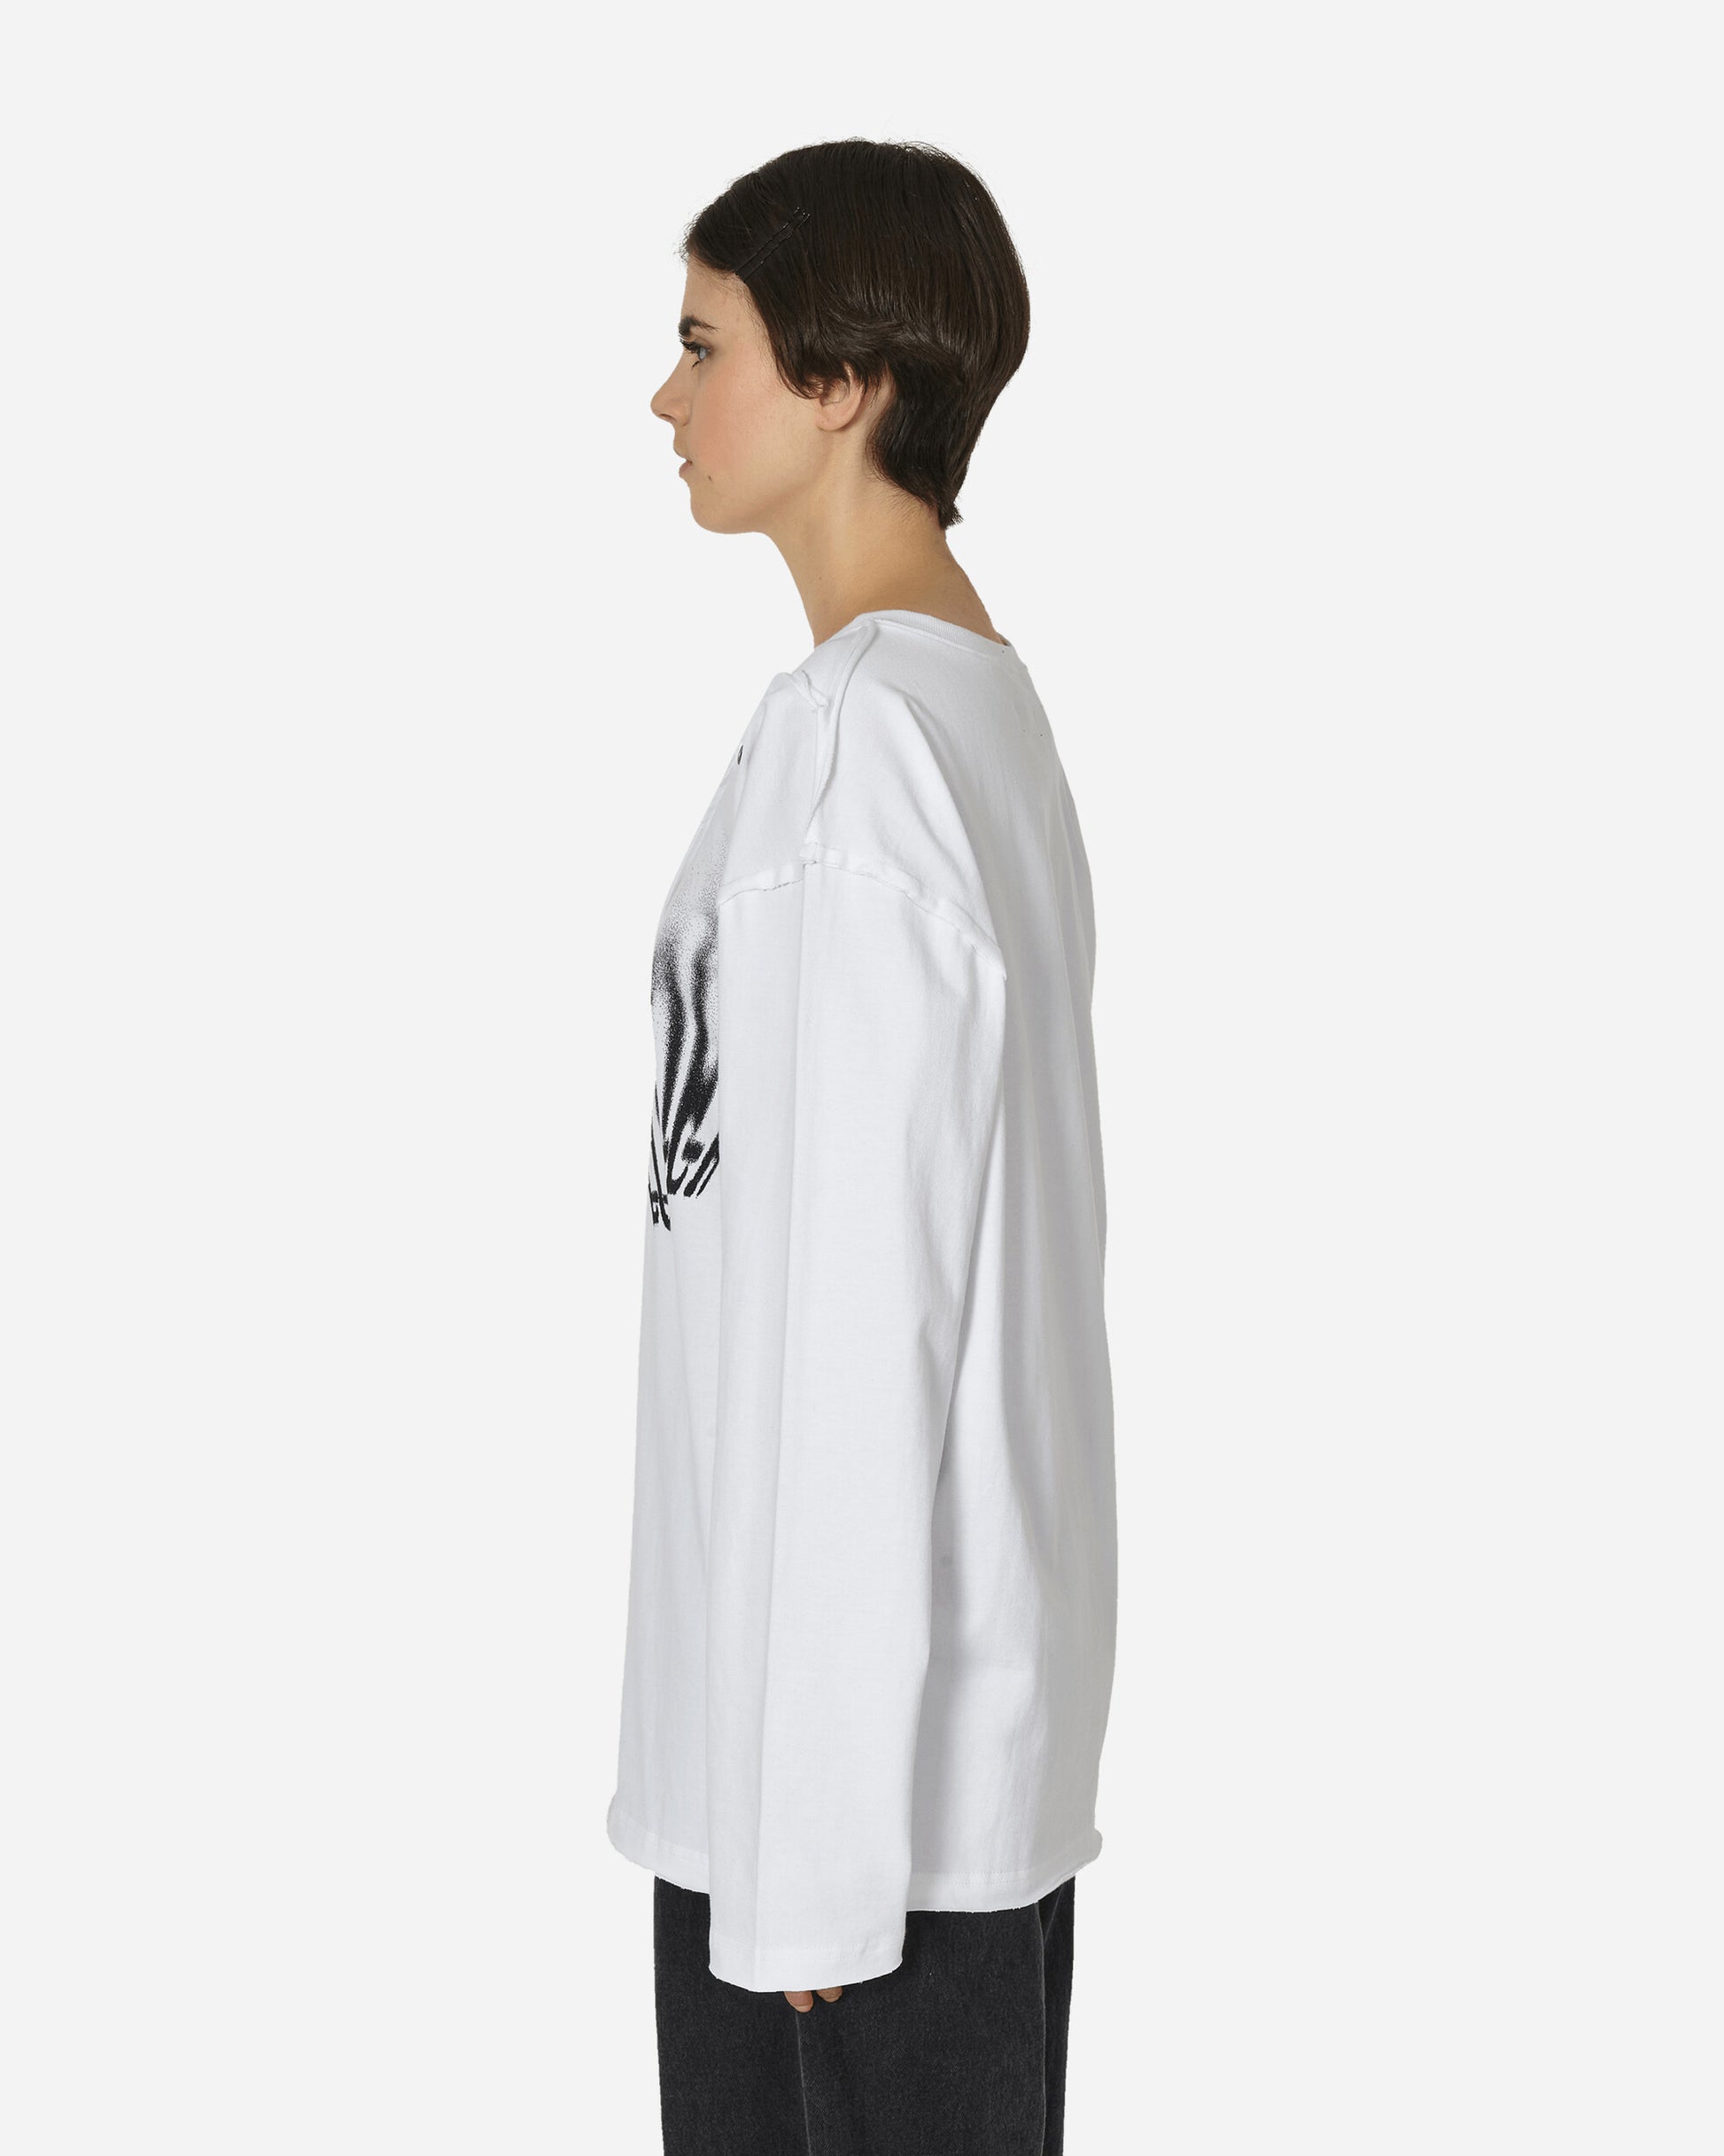 Lueder Sophie Long Sleeve White T-Shirts Longsleeve SOPHIELS WHT